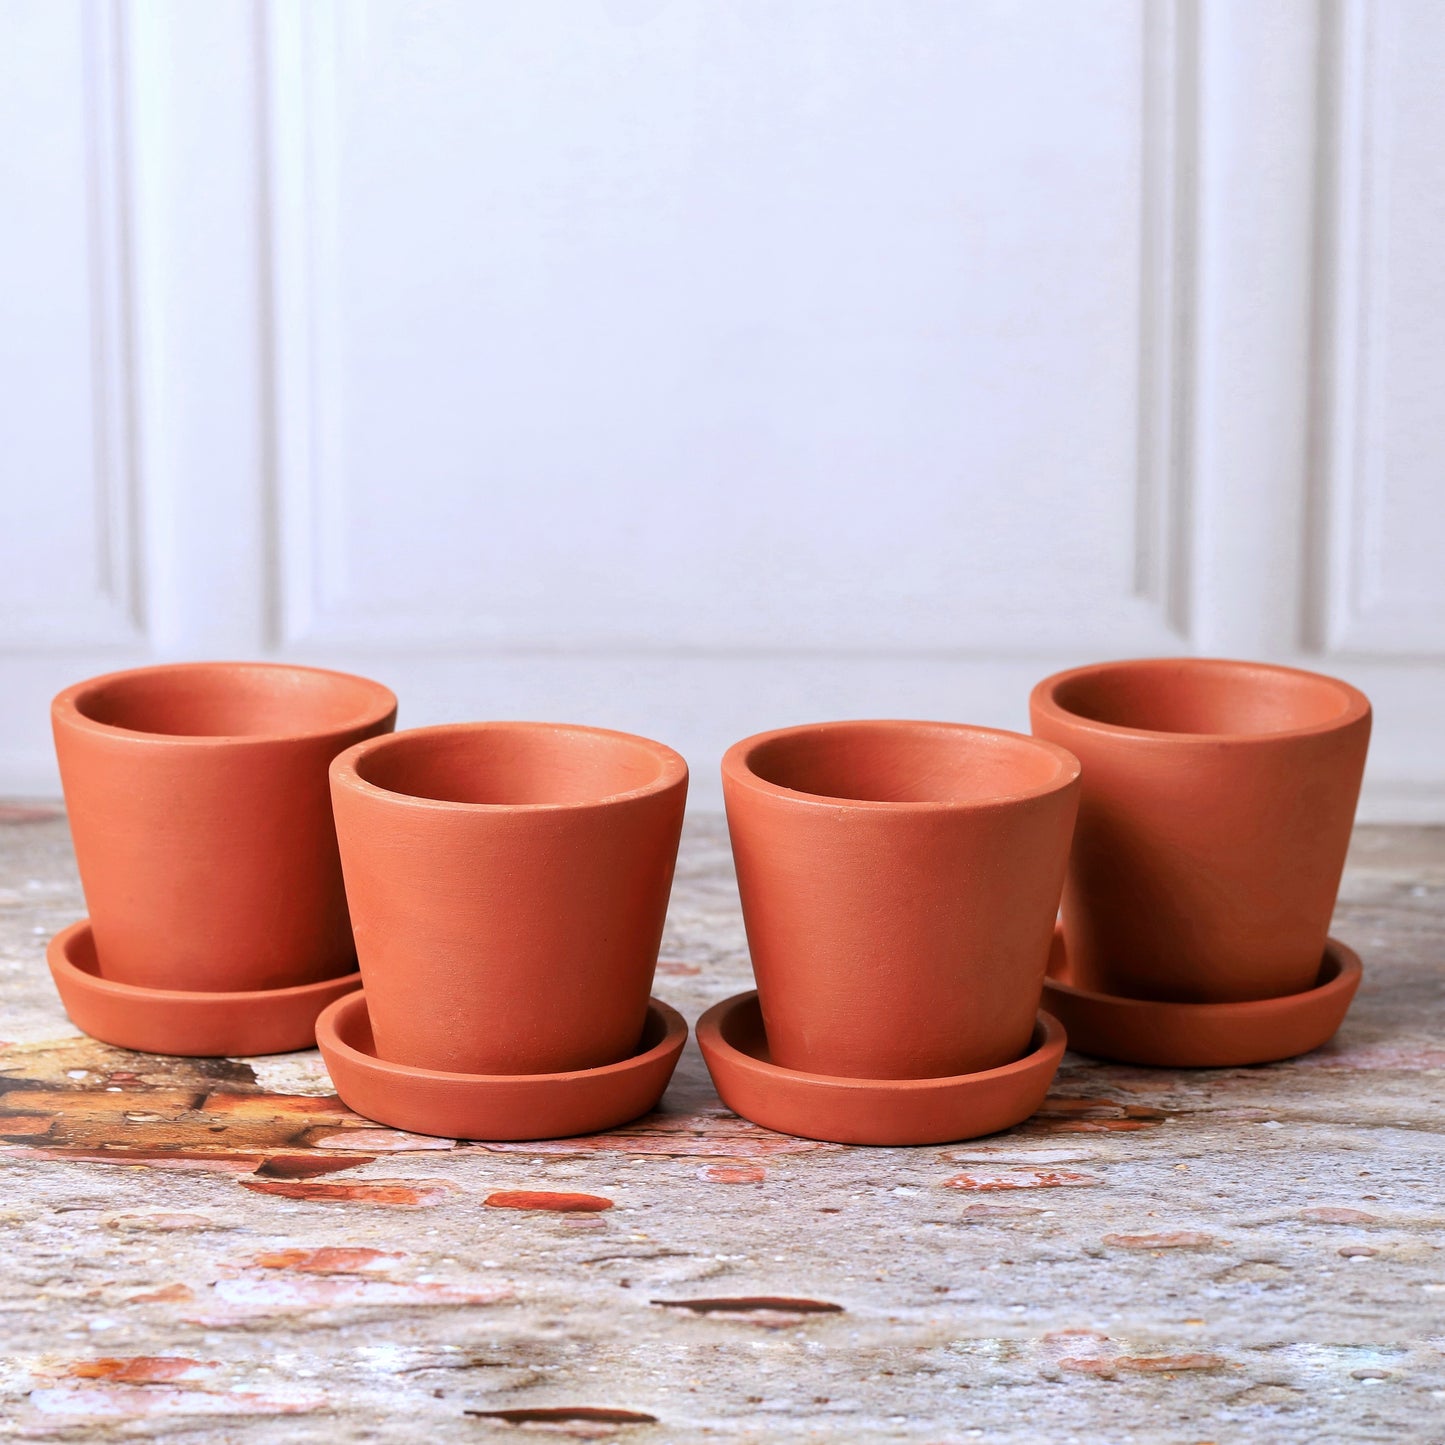 Cone Terracotta Planters (Set of 4)